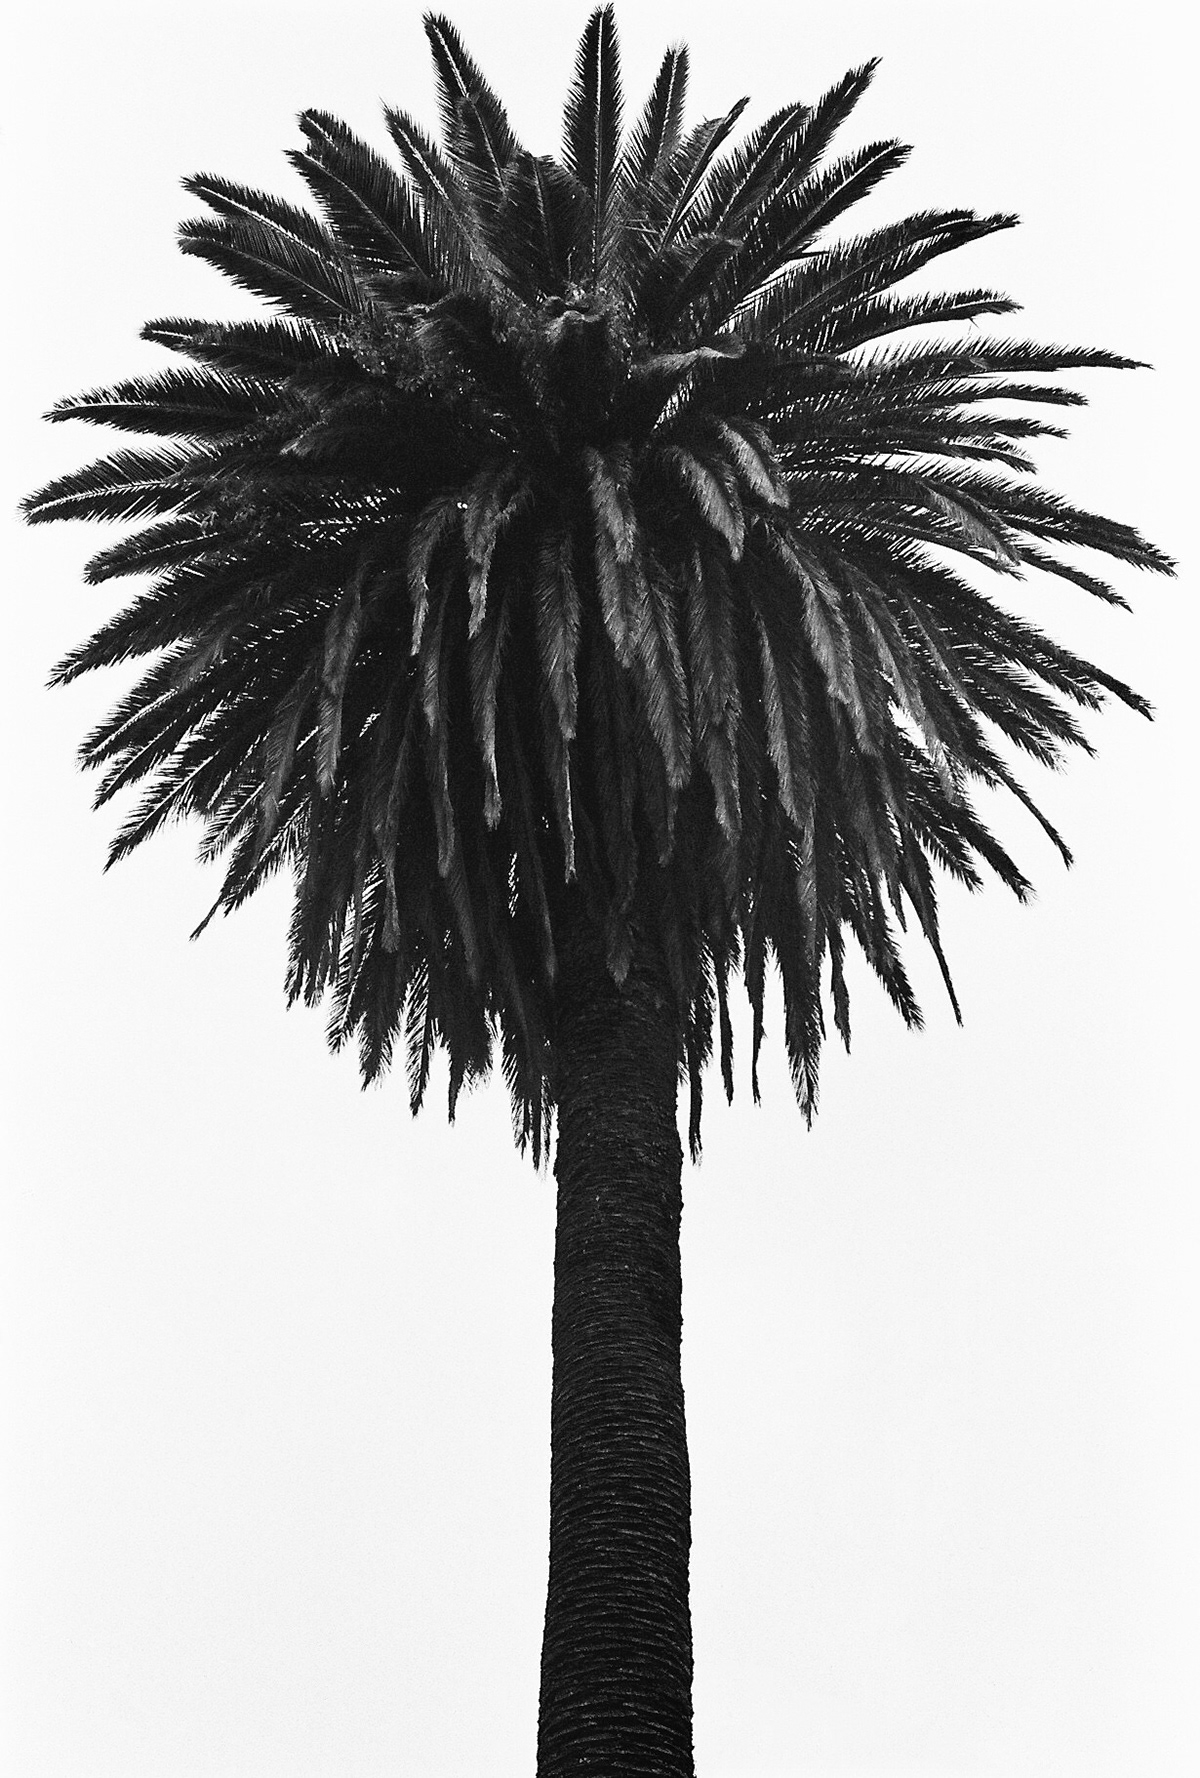 Fotografia camara analoga  minimalist photography Analogue black and white Nature city